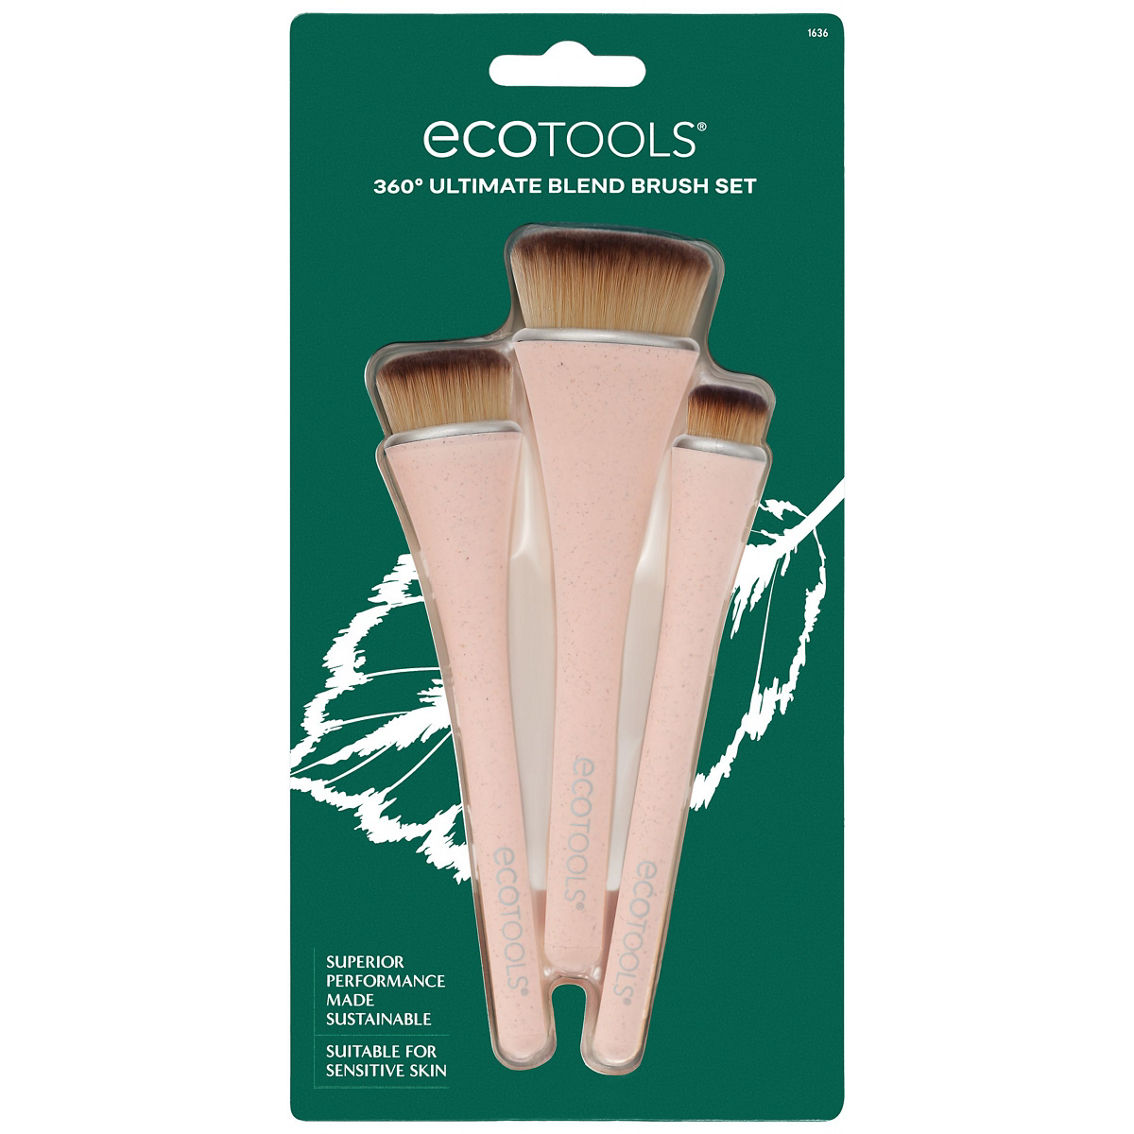 EcoTools 360 Ultimate Blend Kit